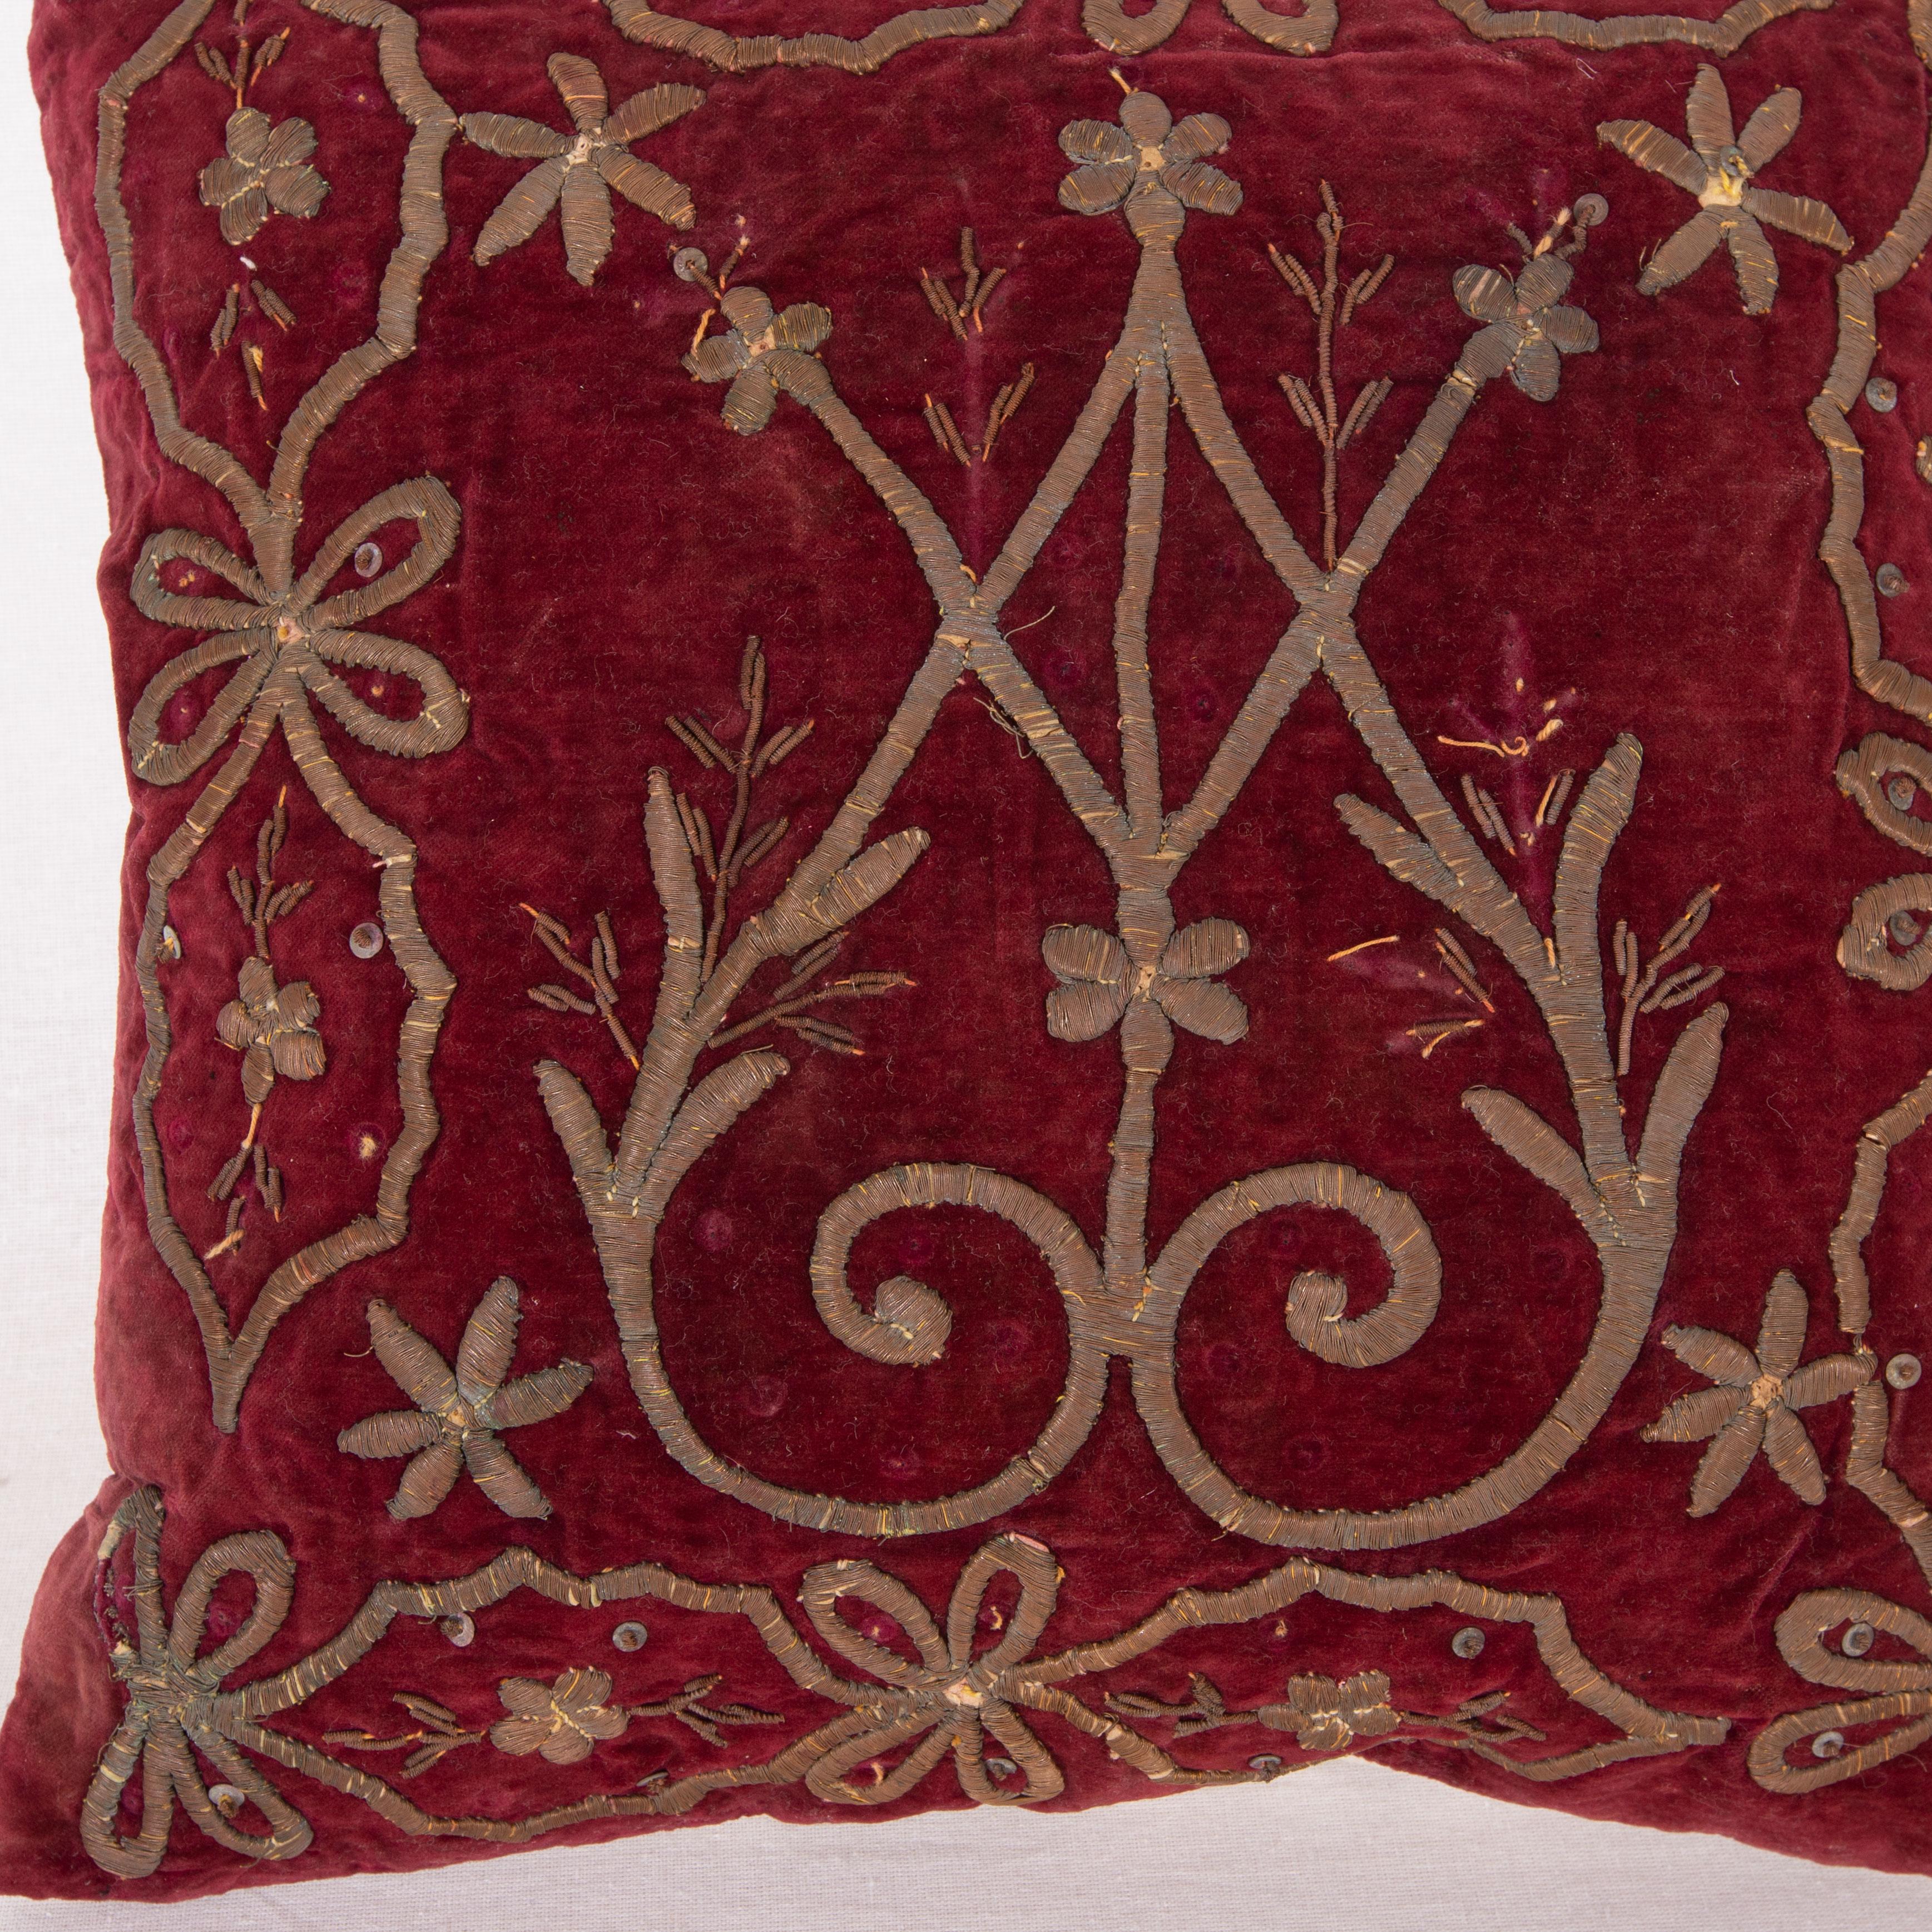 Islamic Antique Ottoman Velvet Sarma Pillow Cover, Early 20th C.